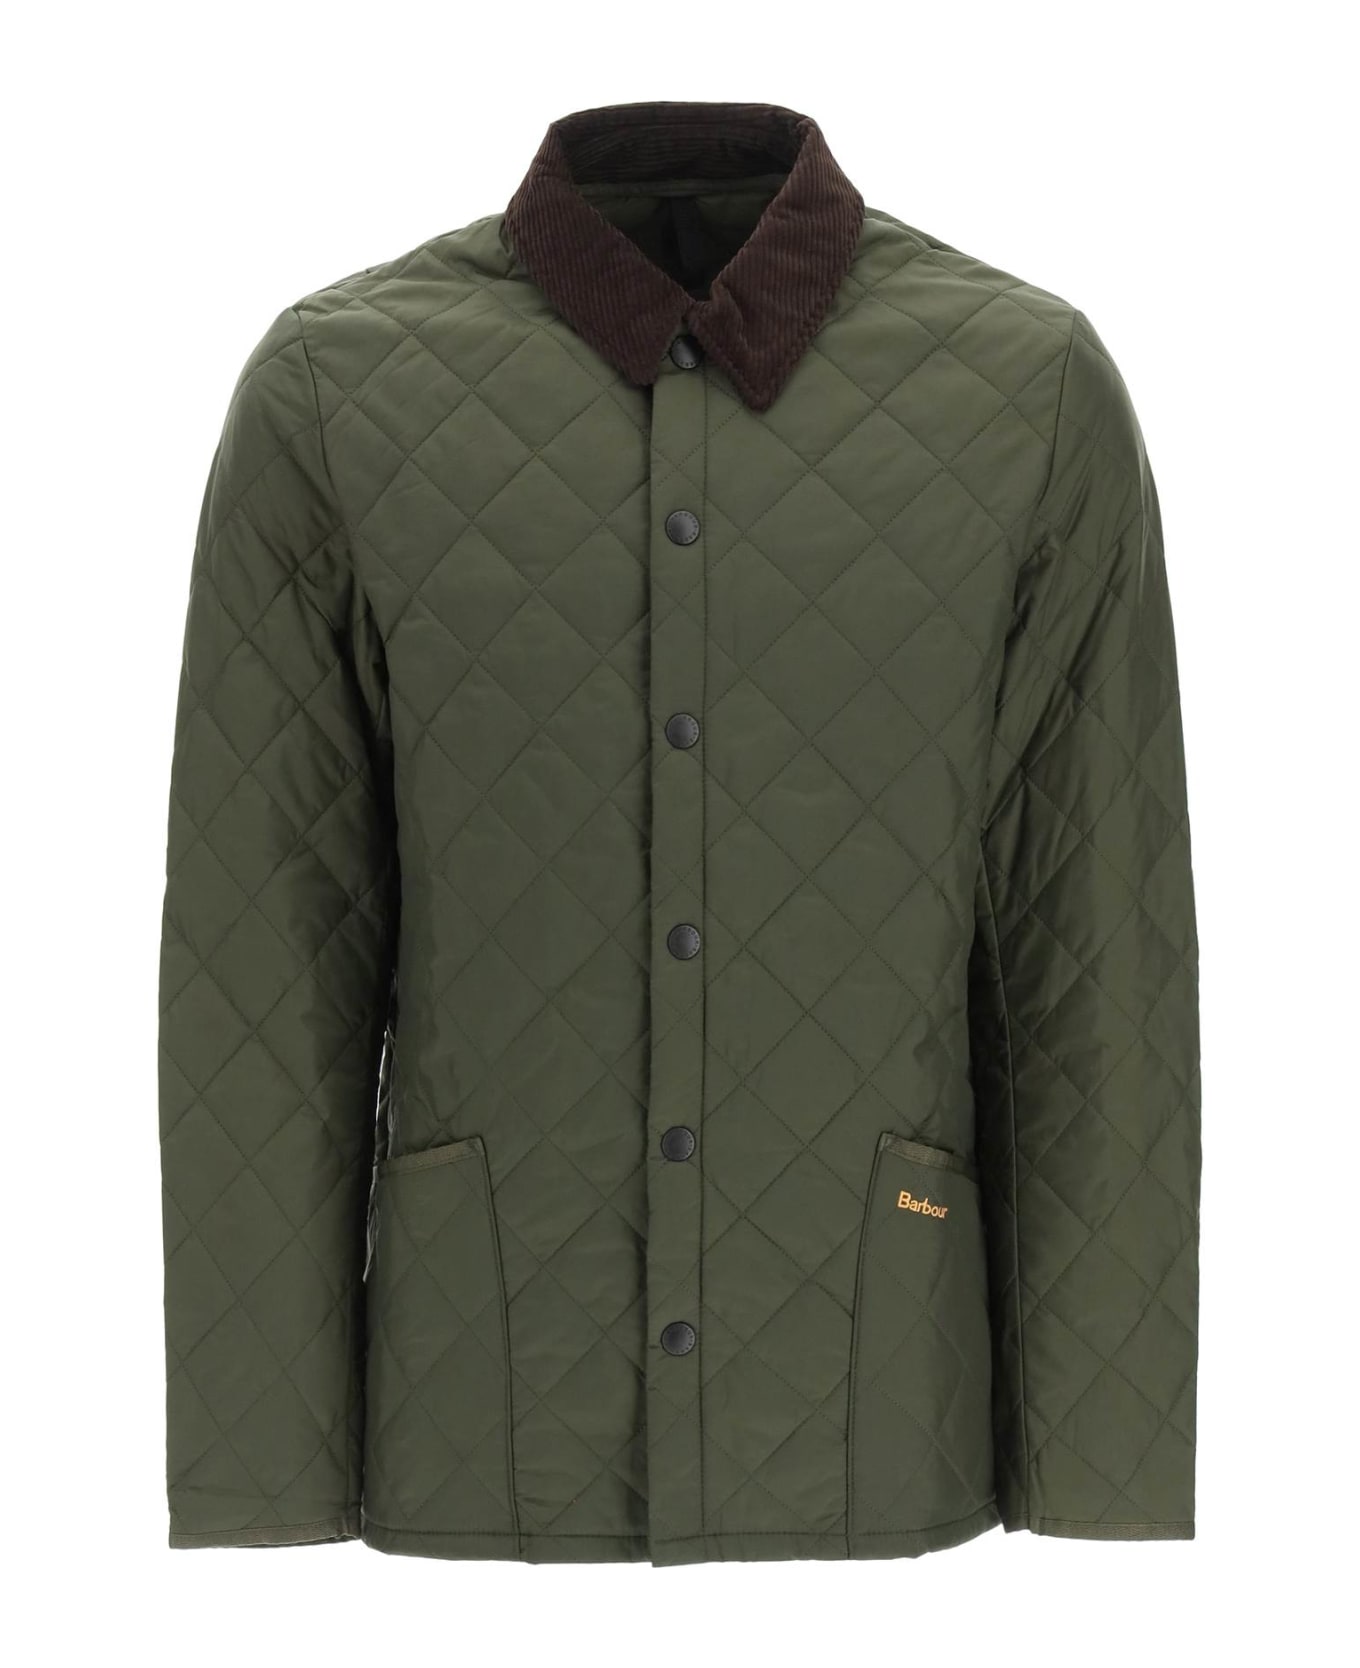 Barbour Heritage Liddesdale Padded Jacket - green ジャケット